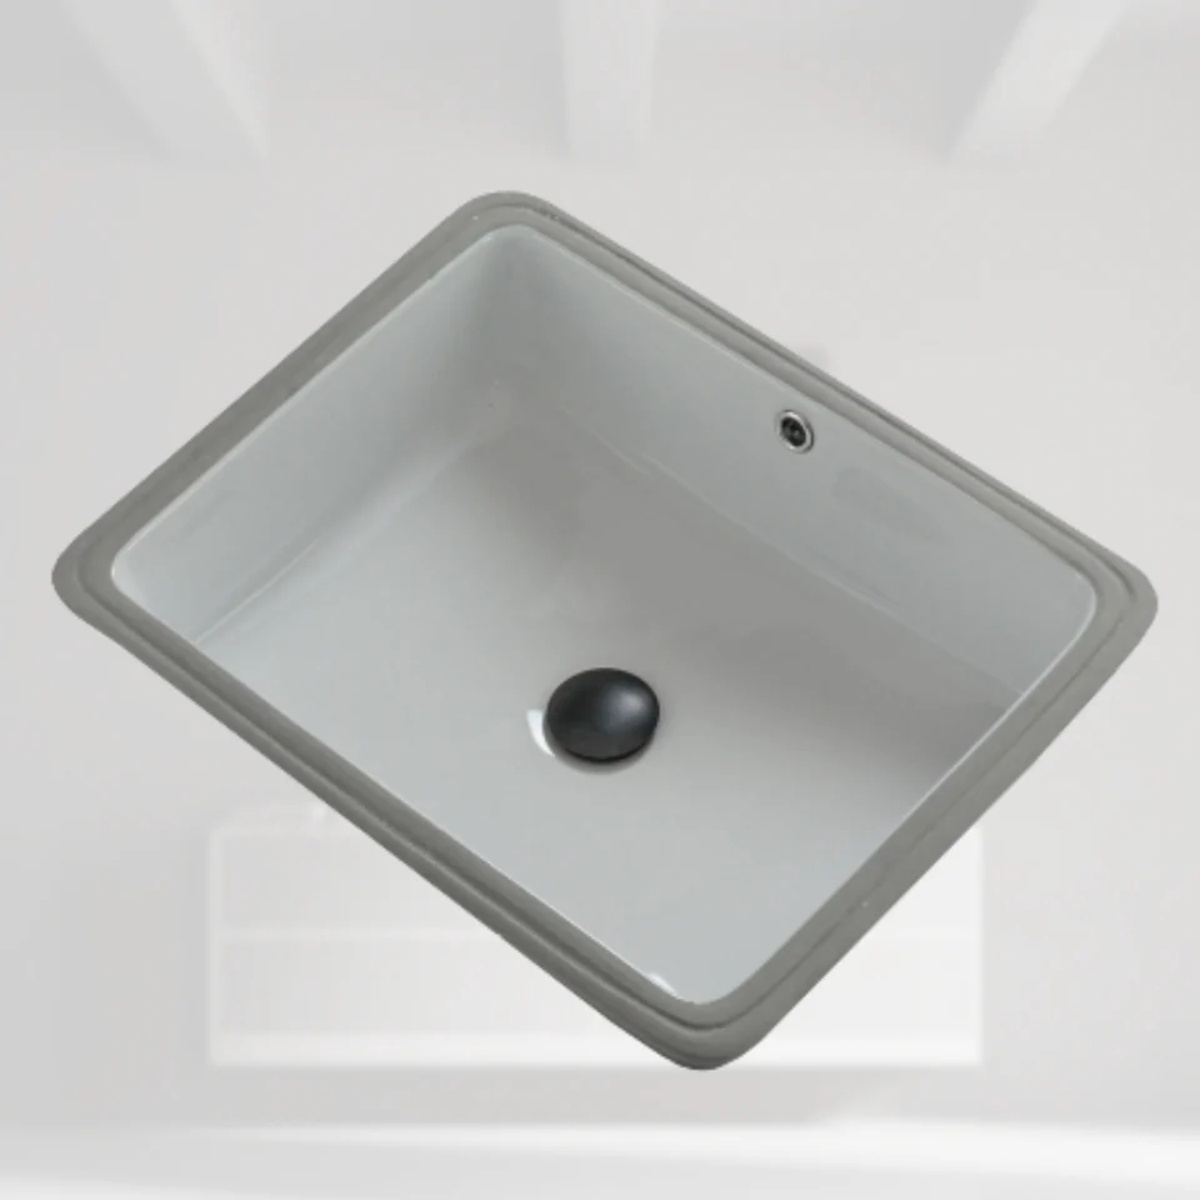 A Look into Minimalist Bathroom Sinks: Simplify Your Space with Sleek Designs